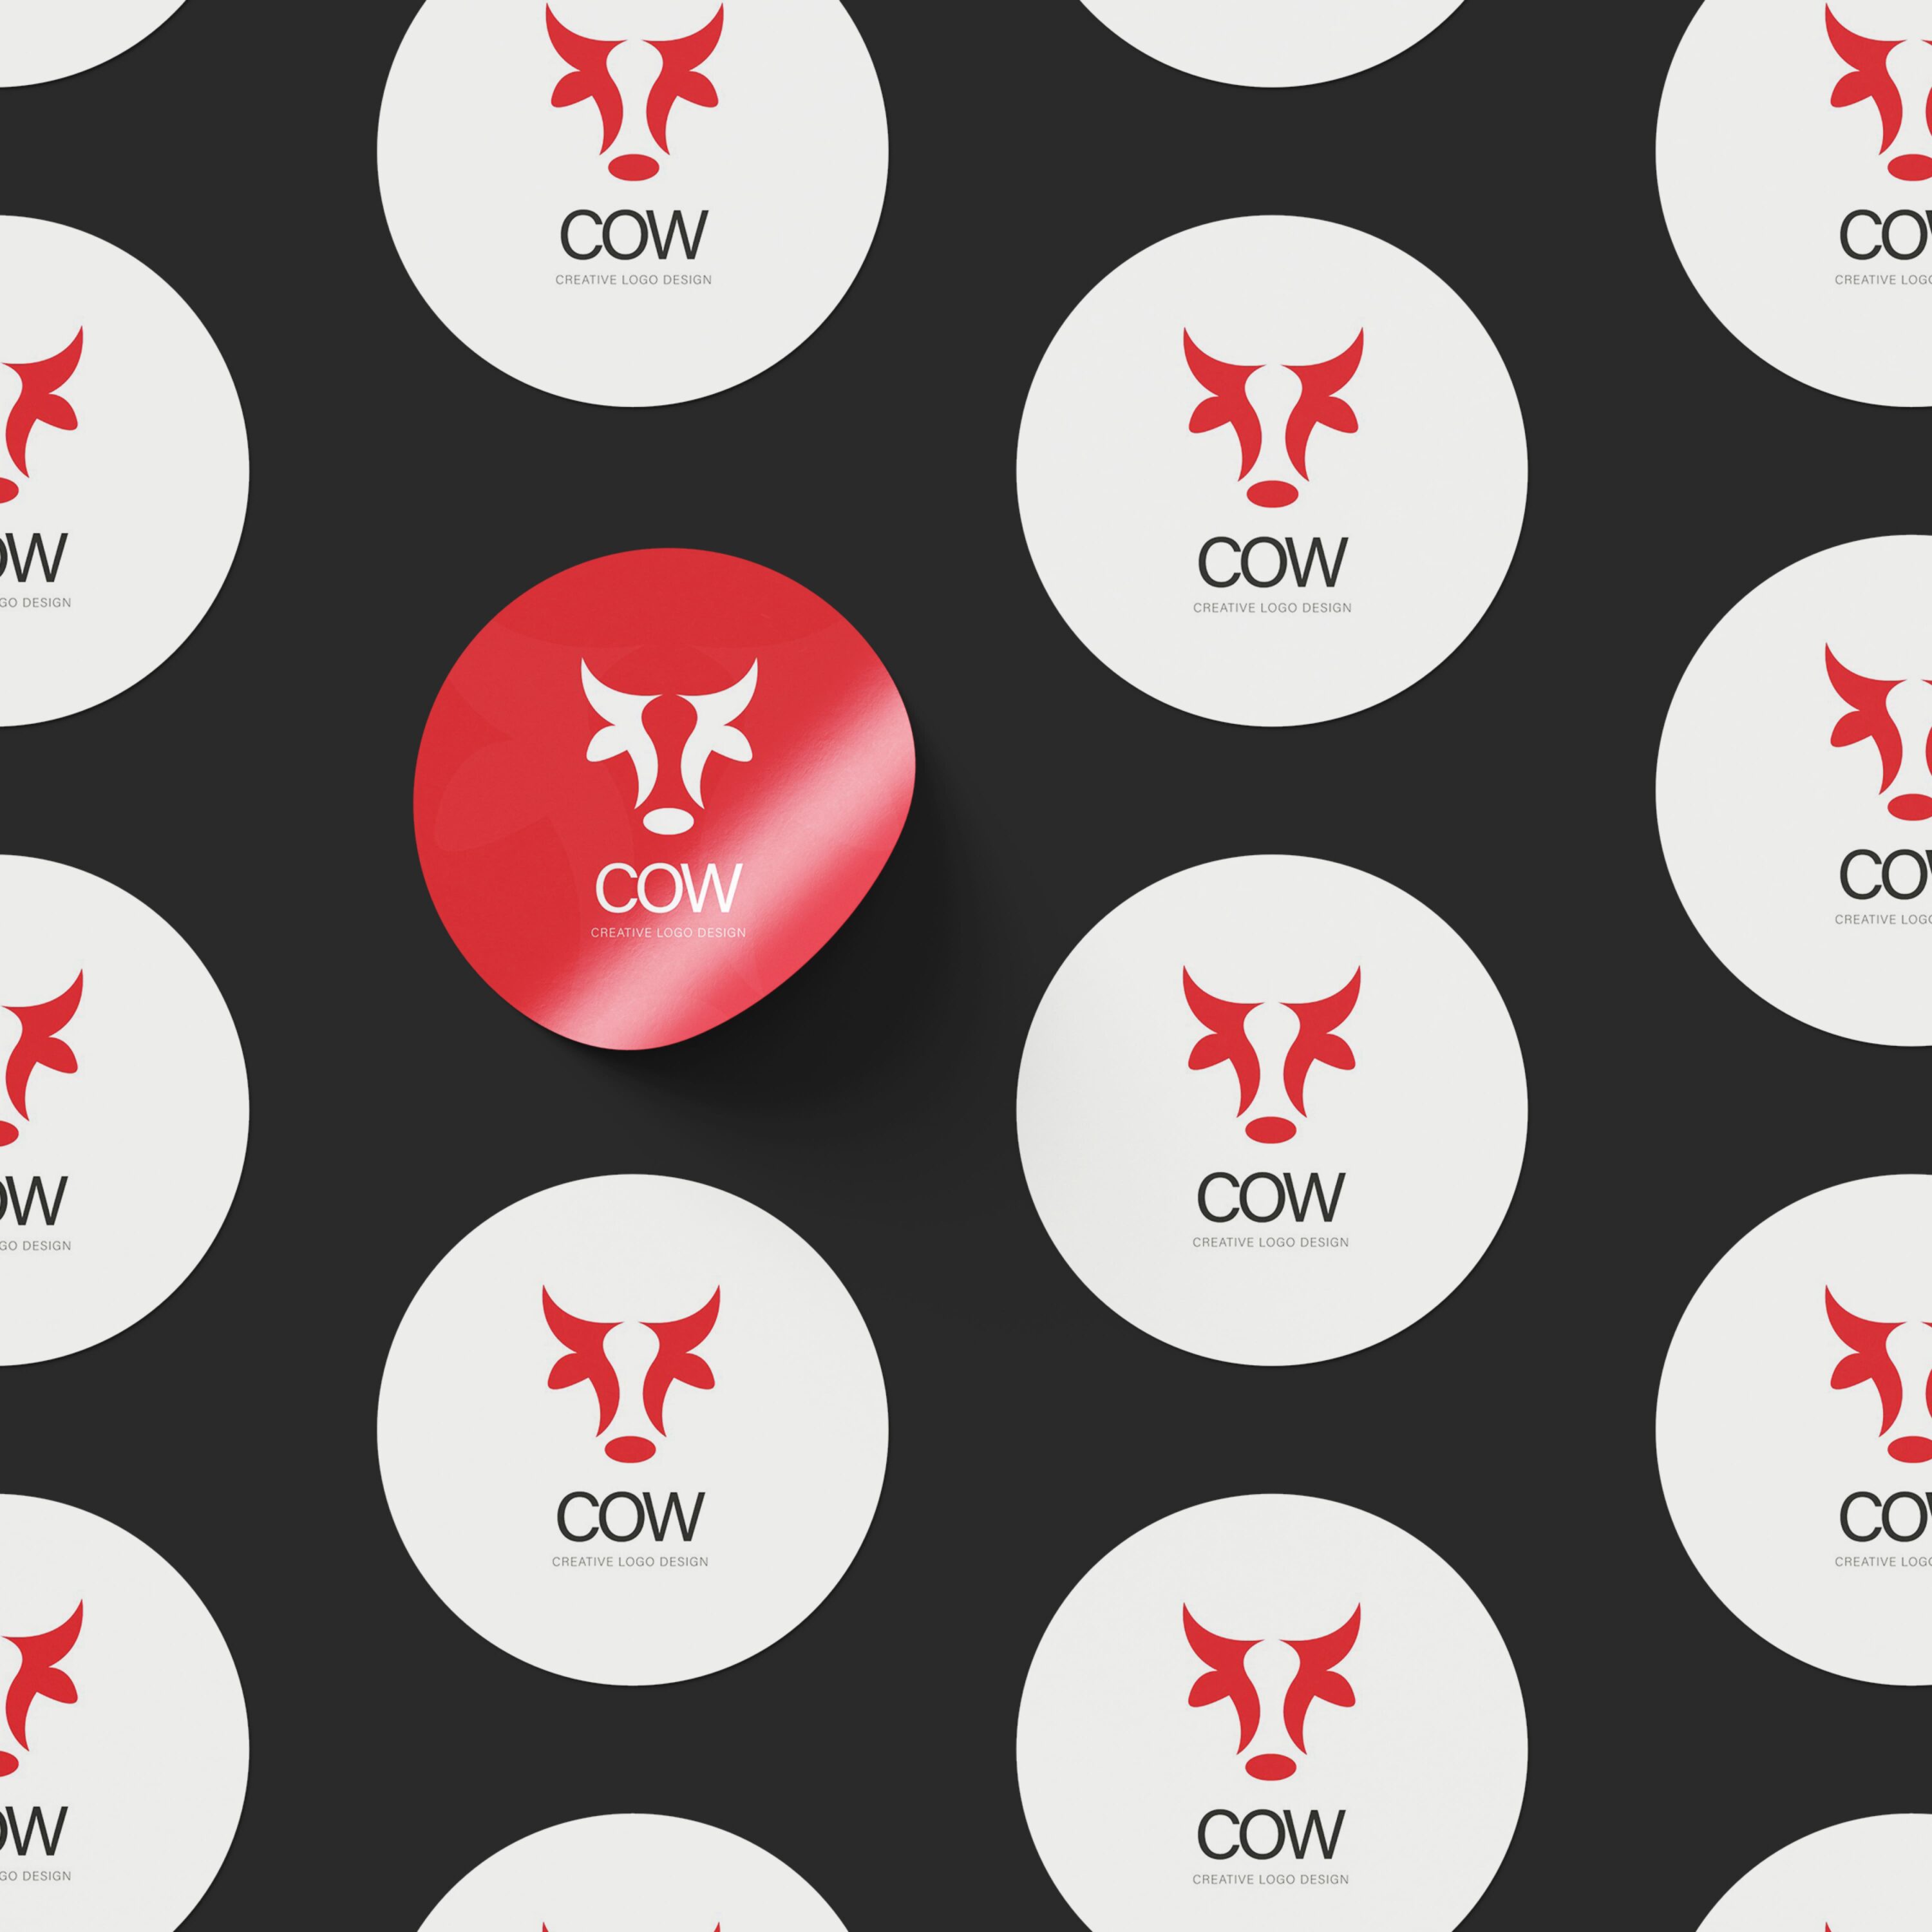 Cow logo cover.